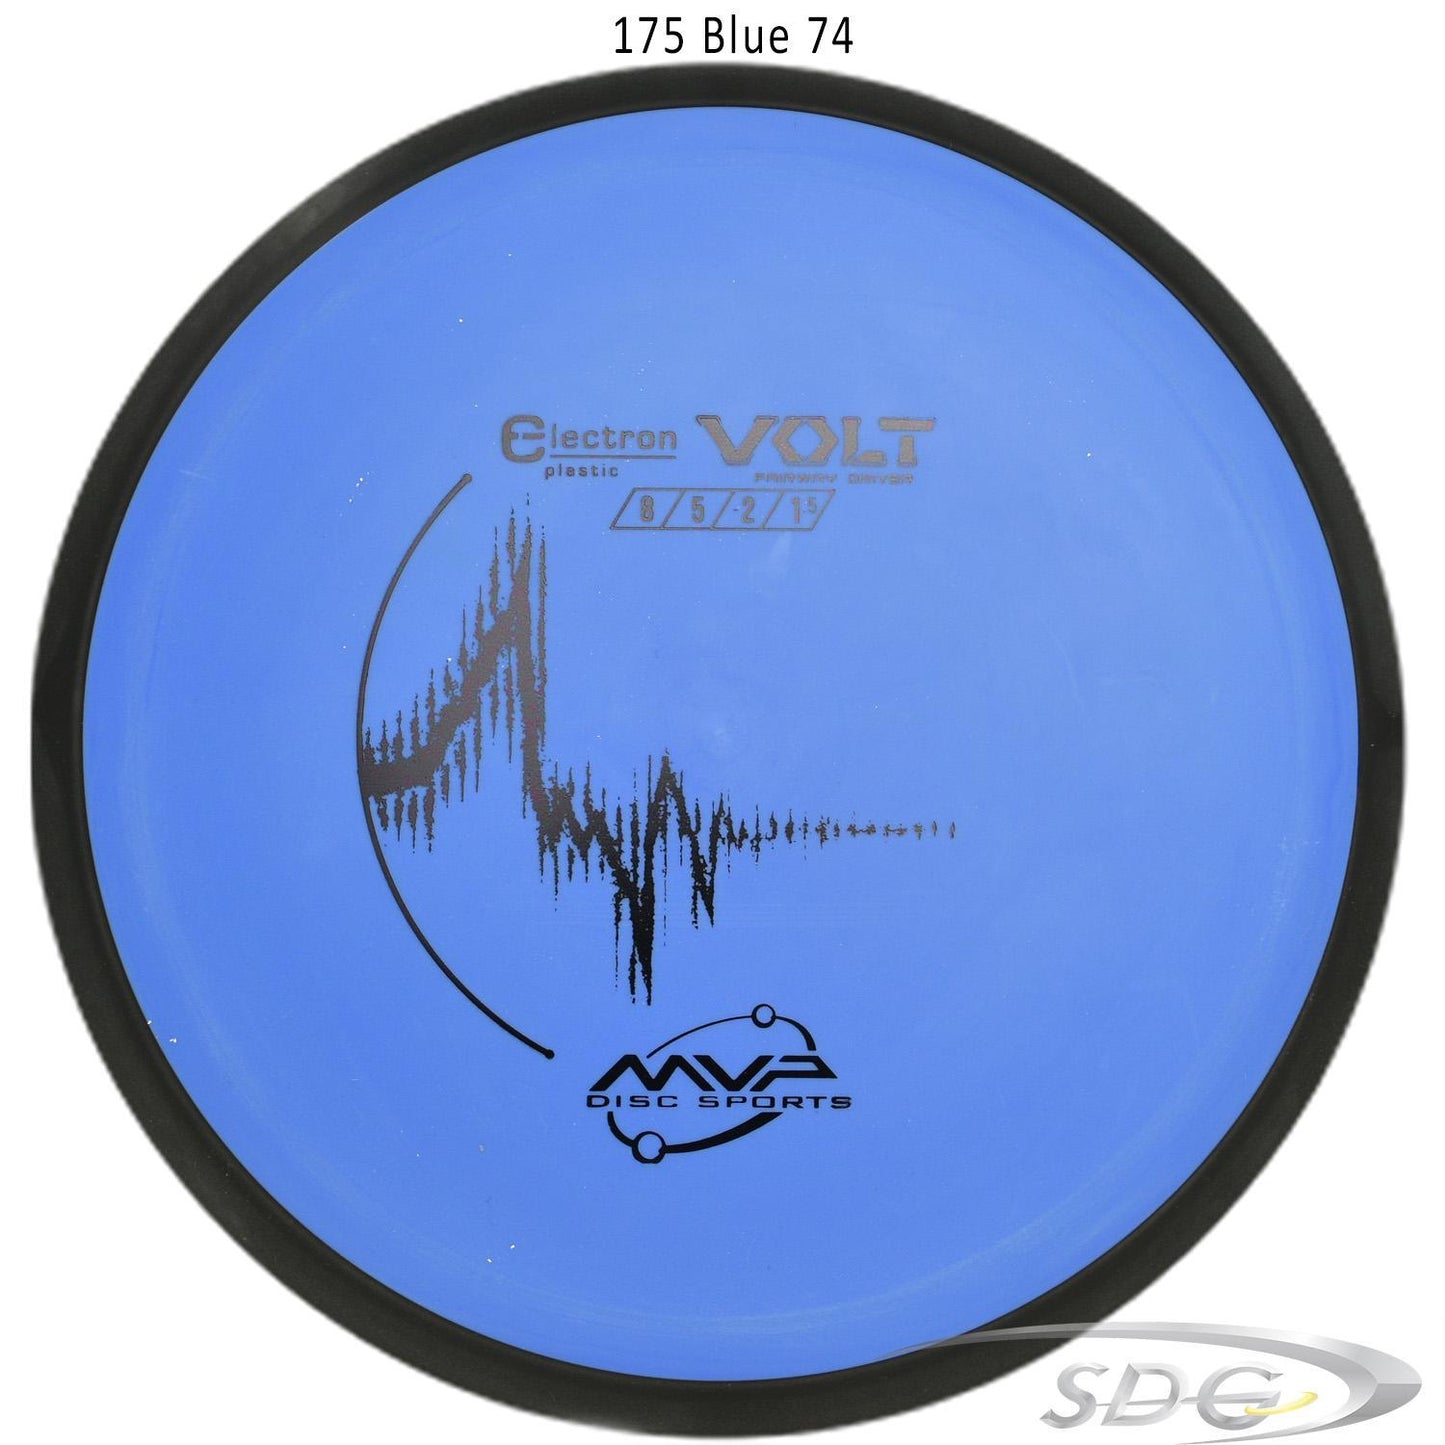 mvp-electron-volt-disc-golf-fairway-driver 175 Blue 74 